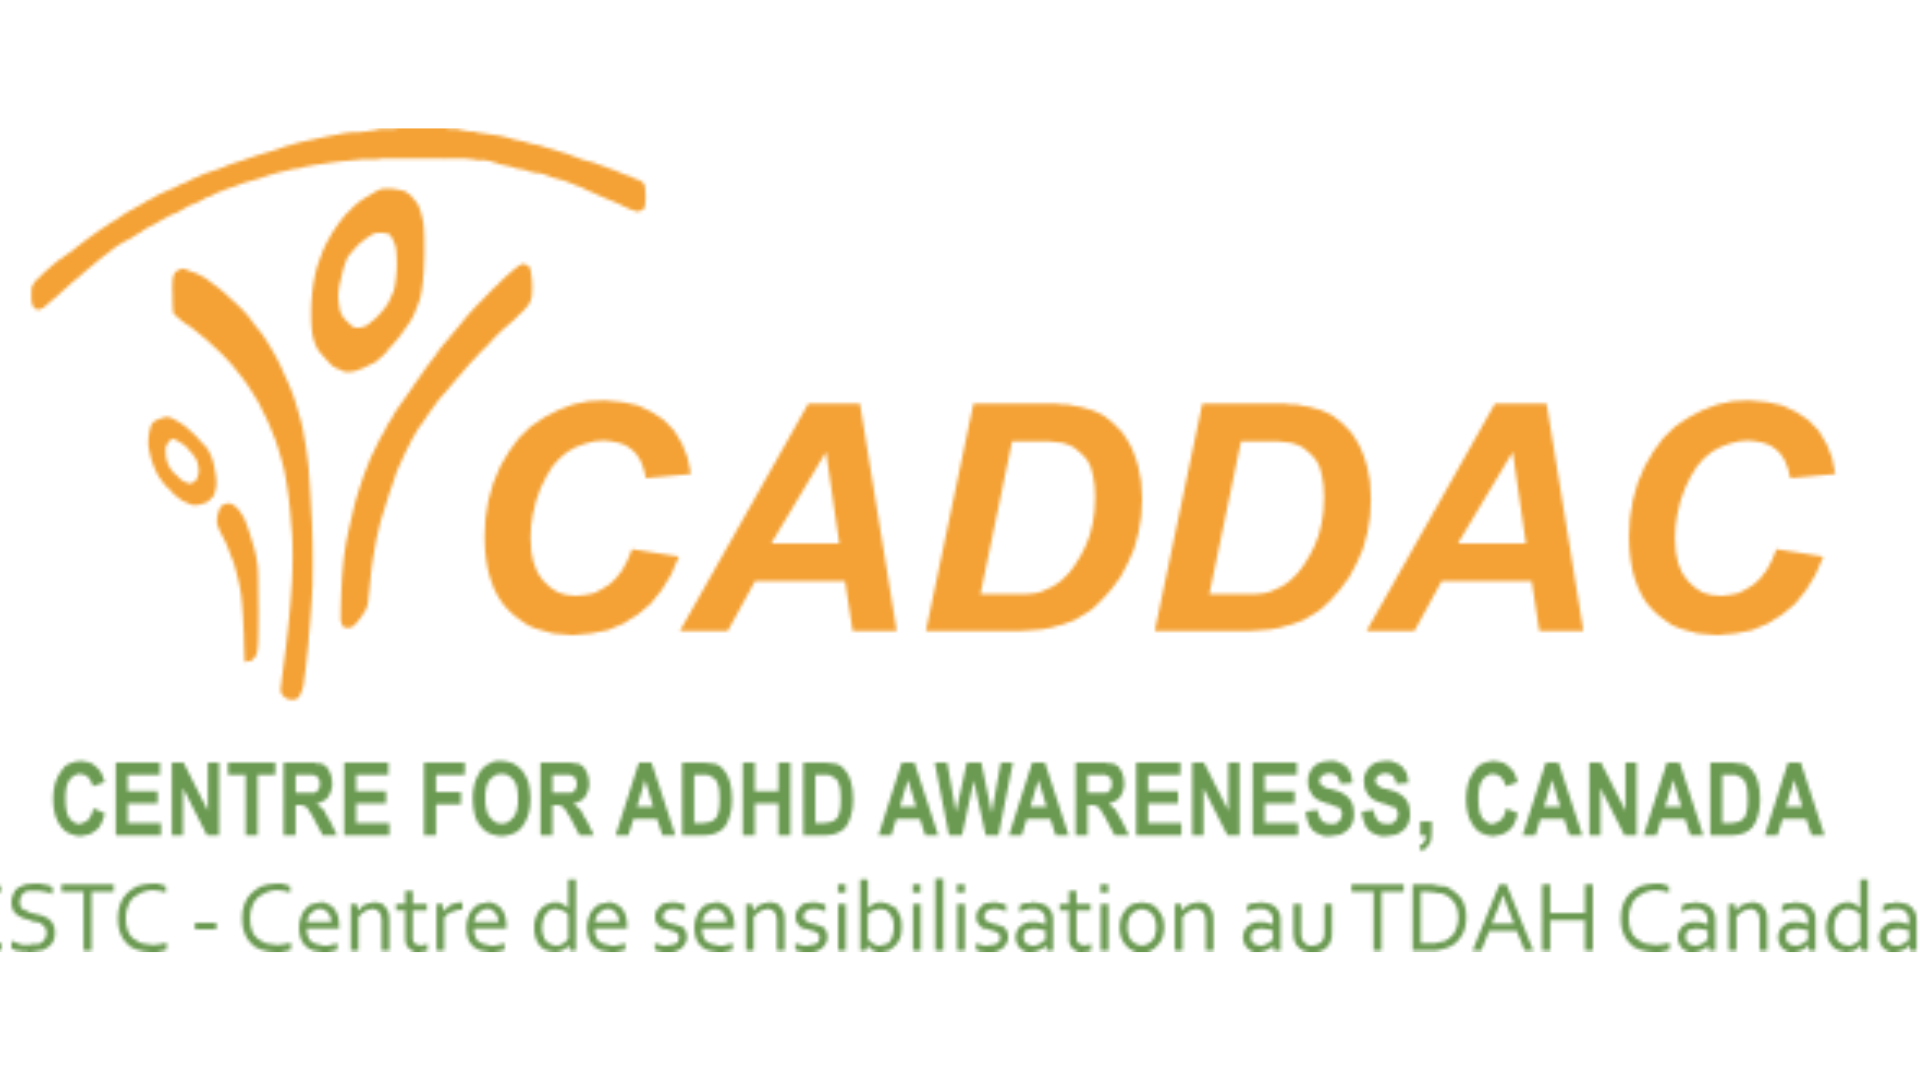 Center for ADHD awareness